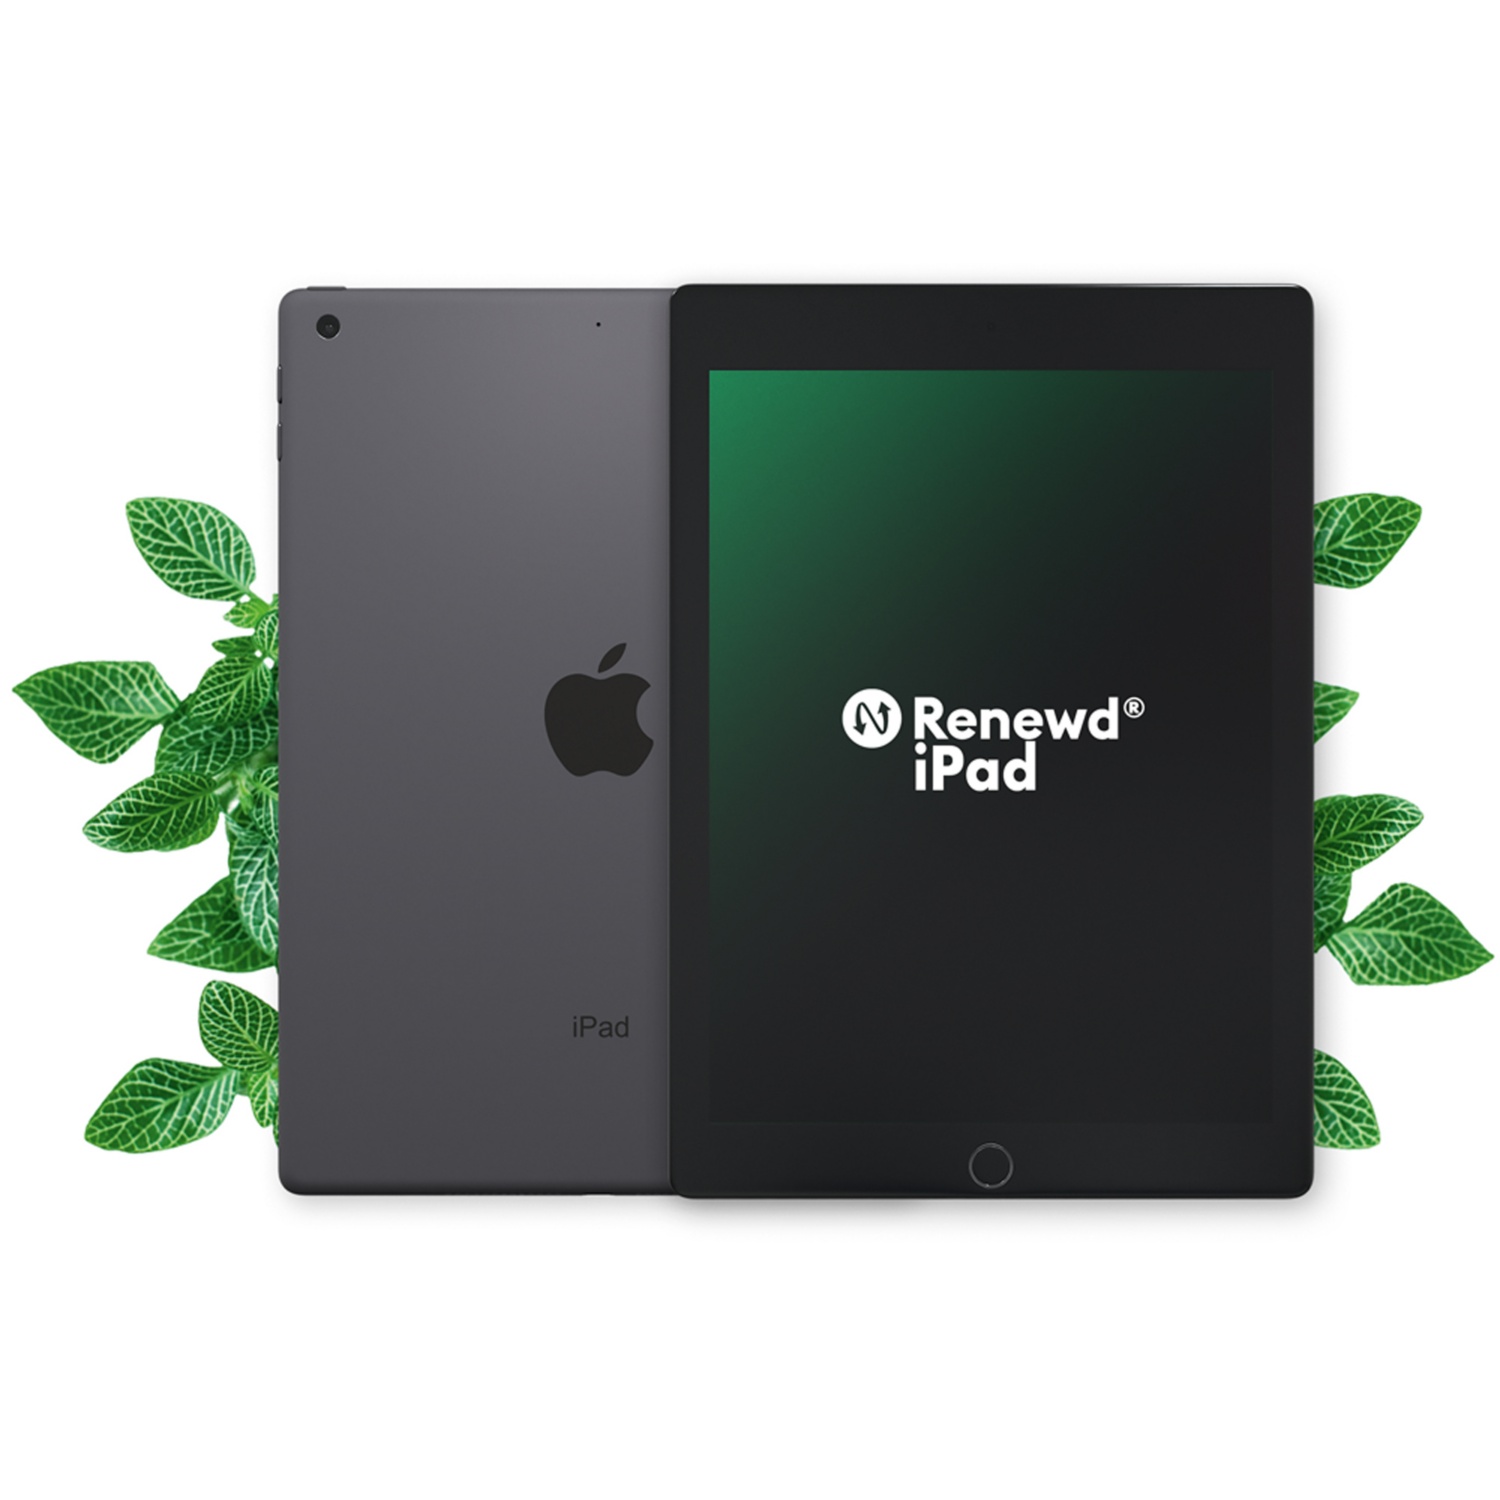 RENEWD iPad 5 (32GB) Space Grey